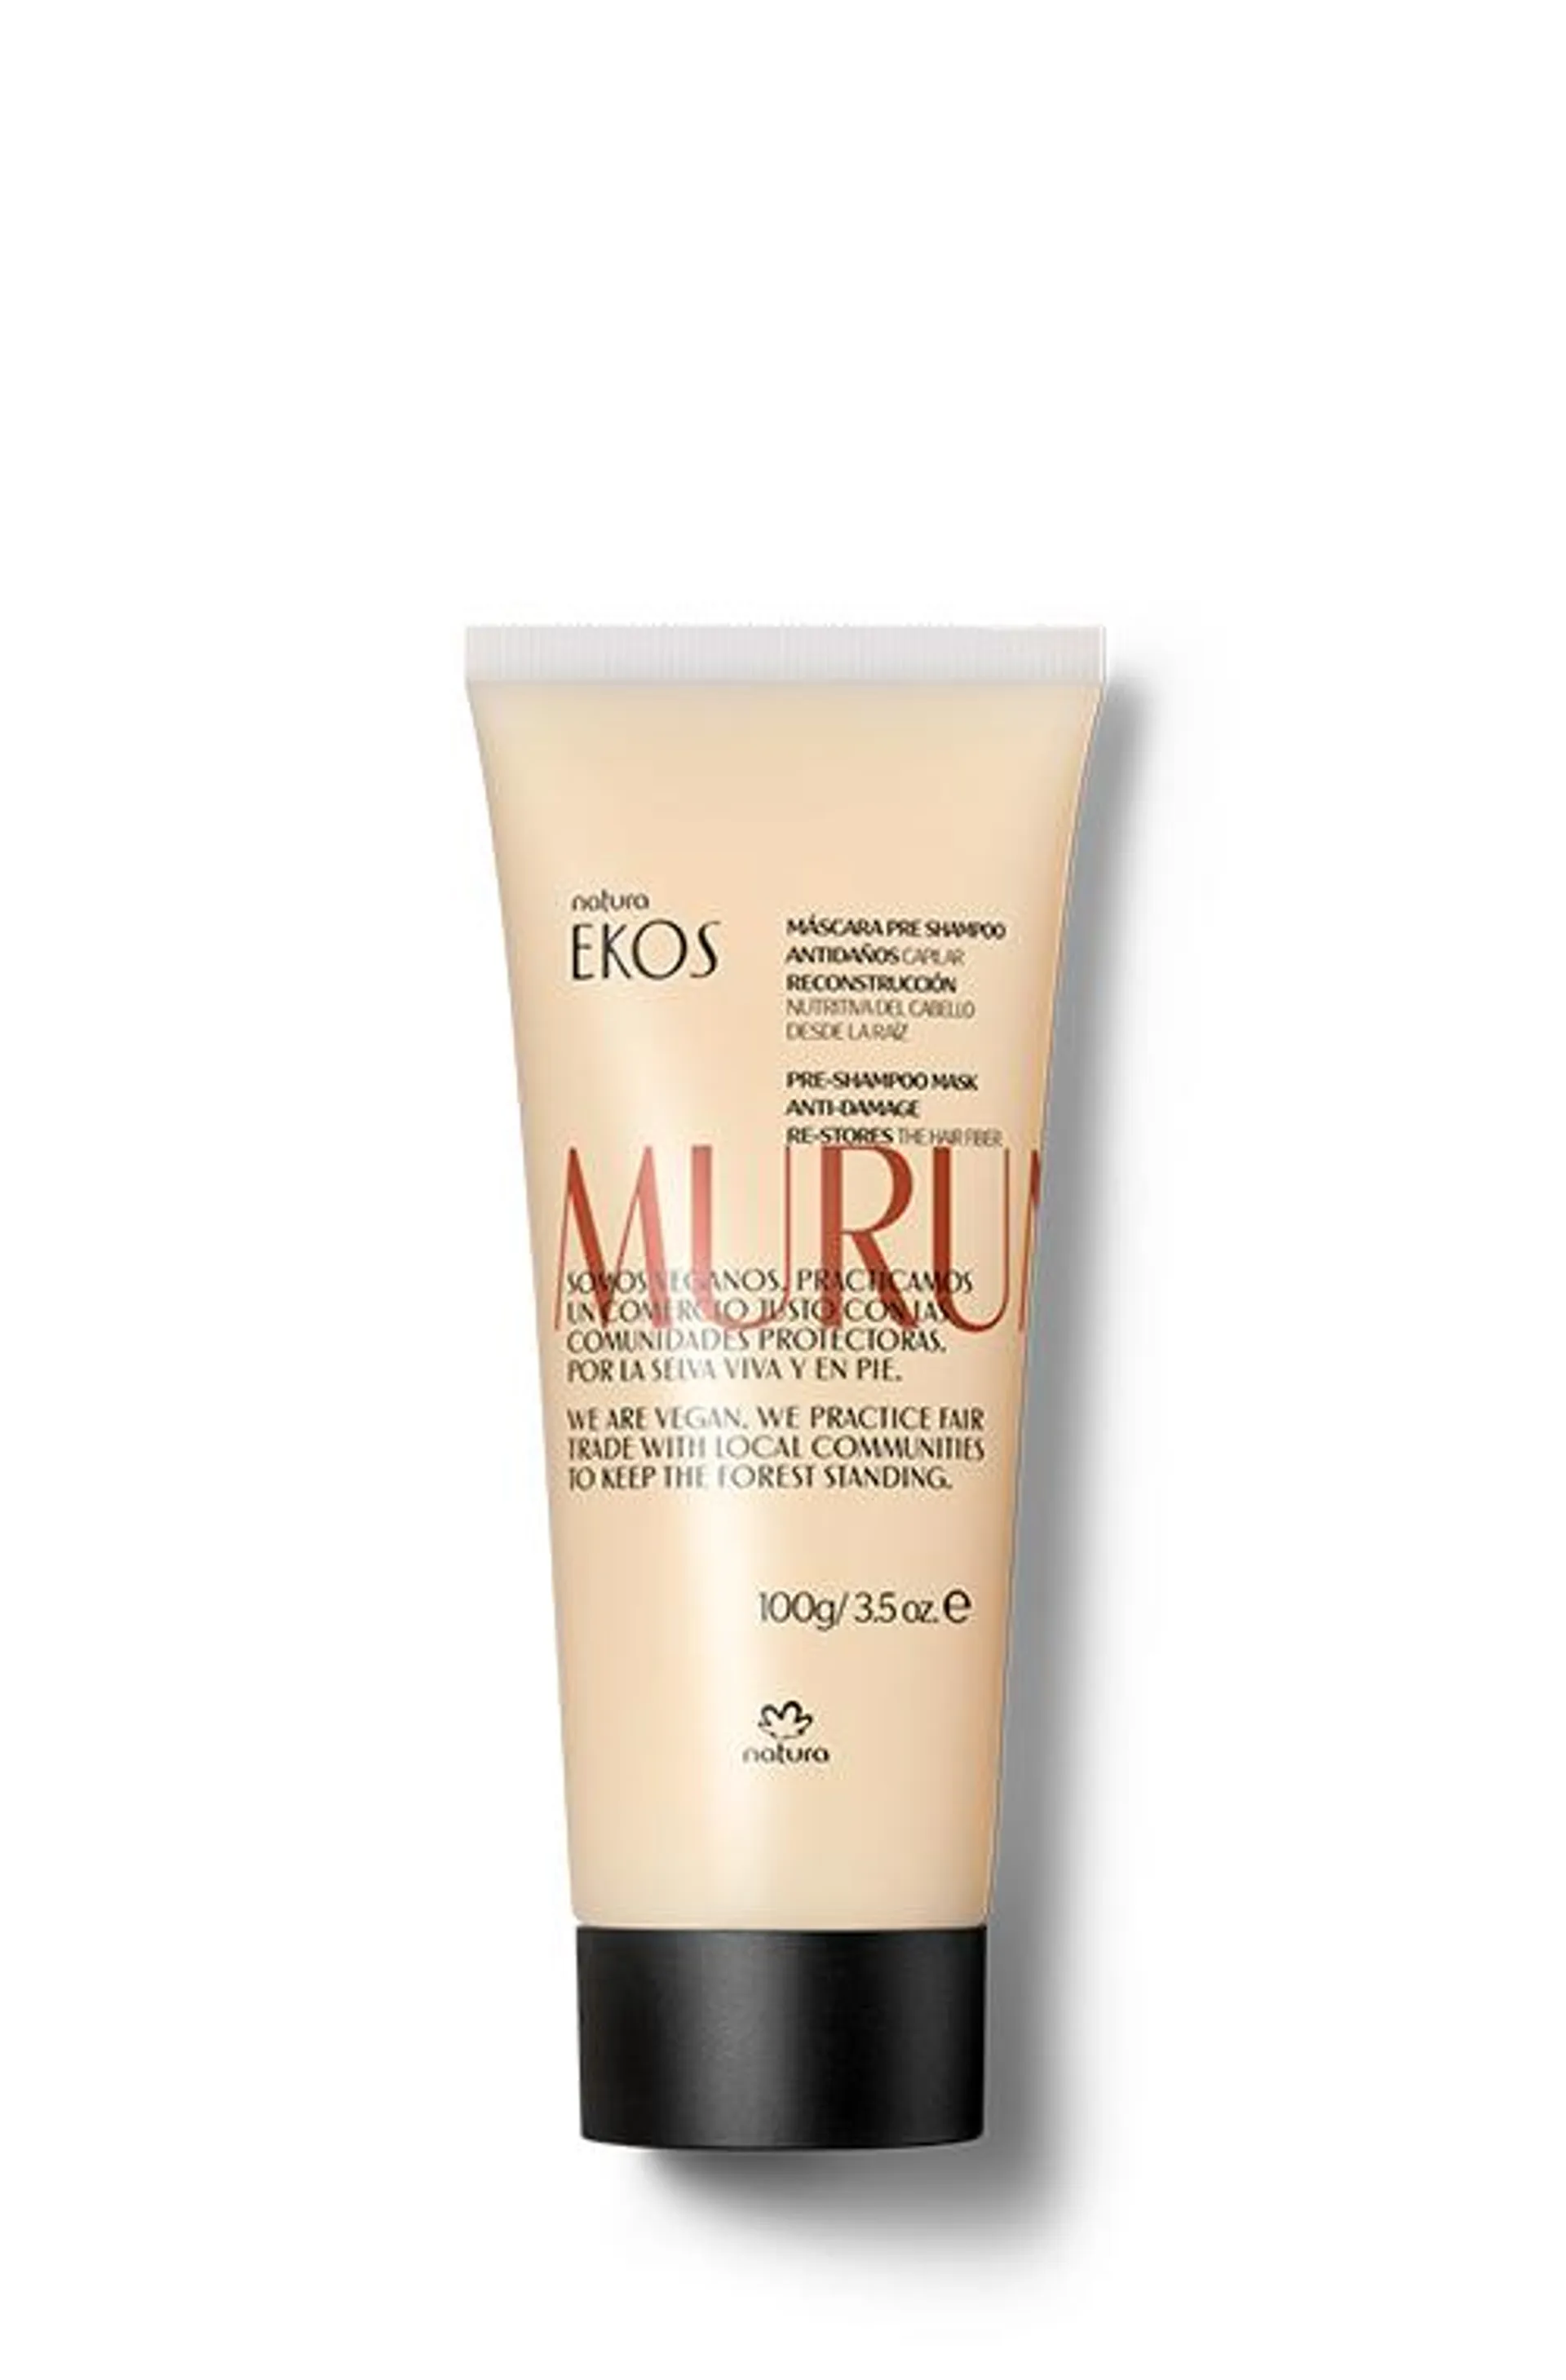 Ekos Murumuru Hair Anti-Damage Pre-Shampoo Mask